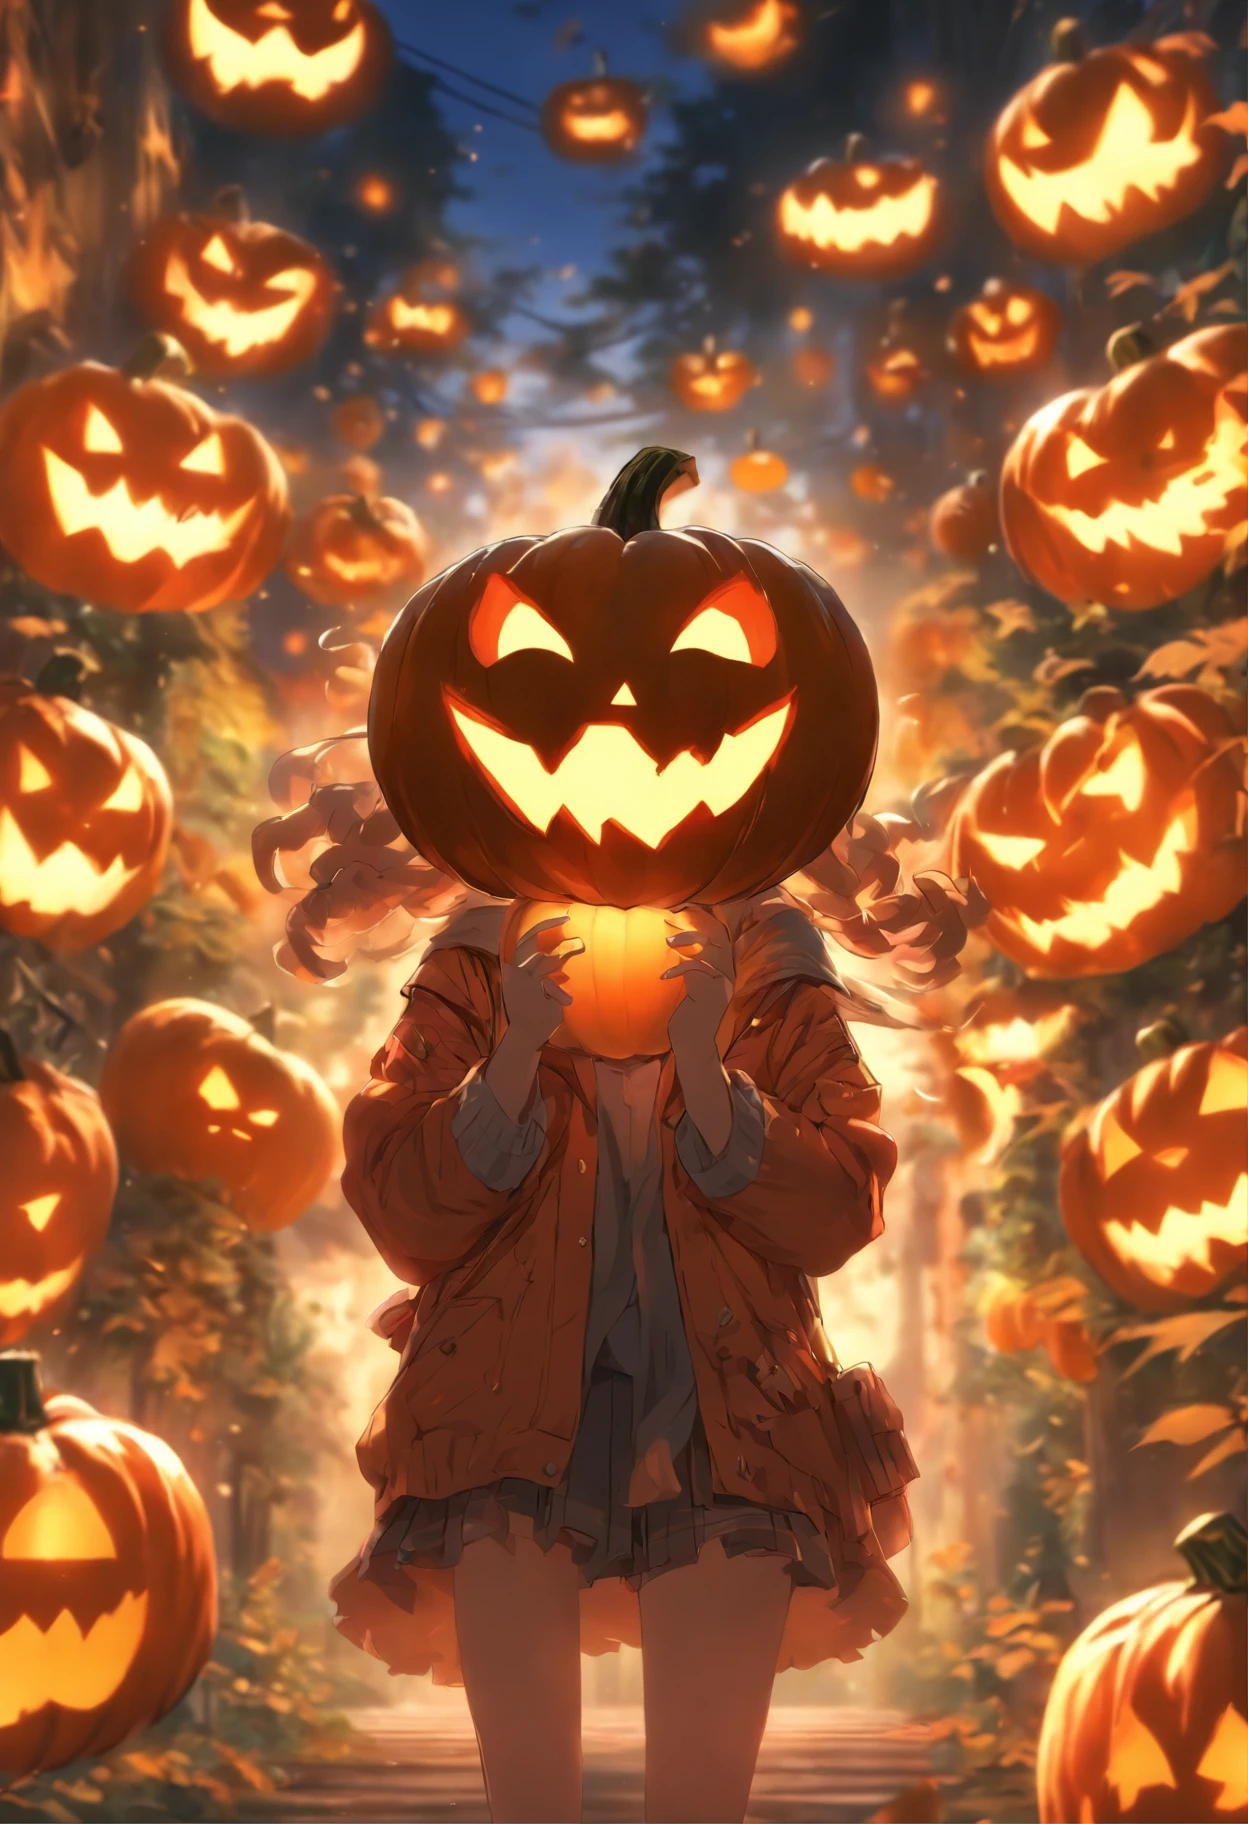 Kawaii Japanese Anime Pumpkin Halloween Graphic by Turtle Rabbit · Creative  Fabrica